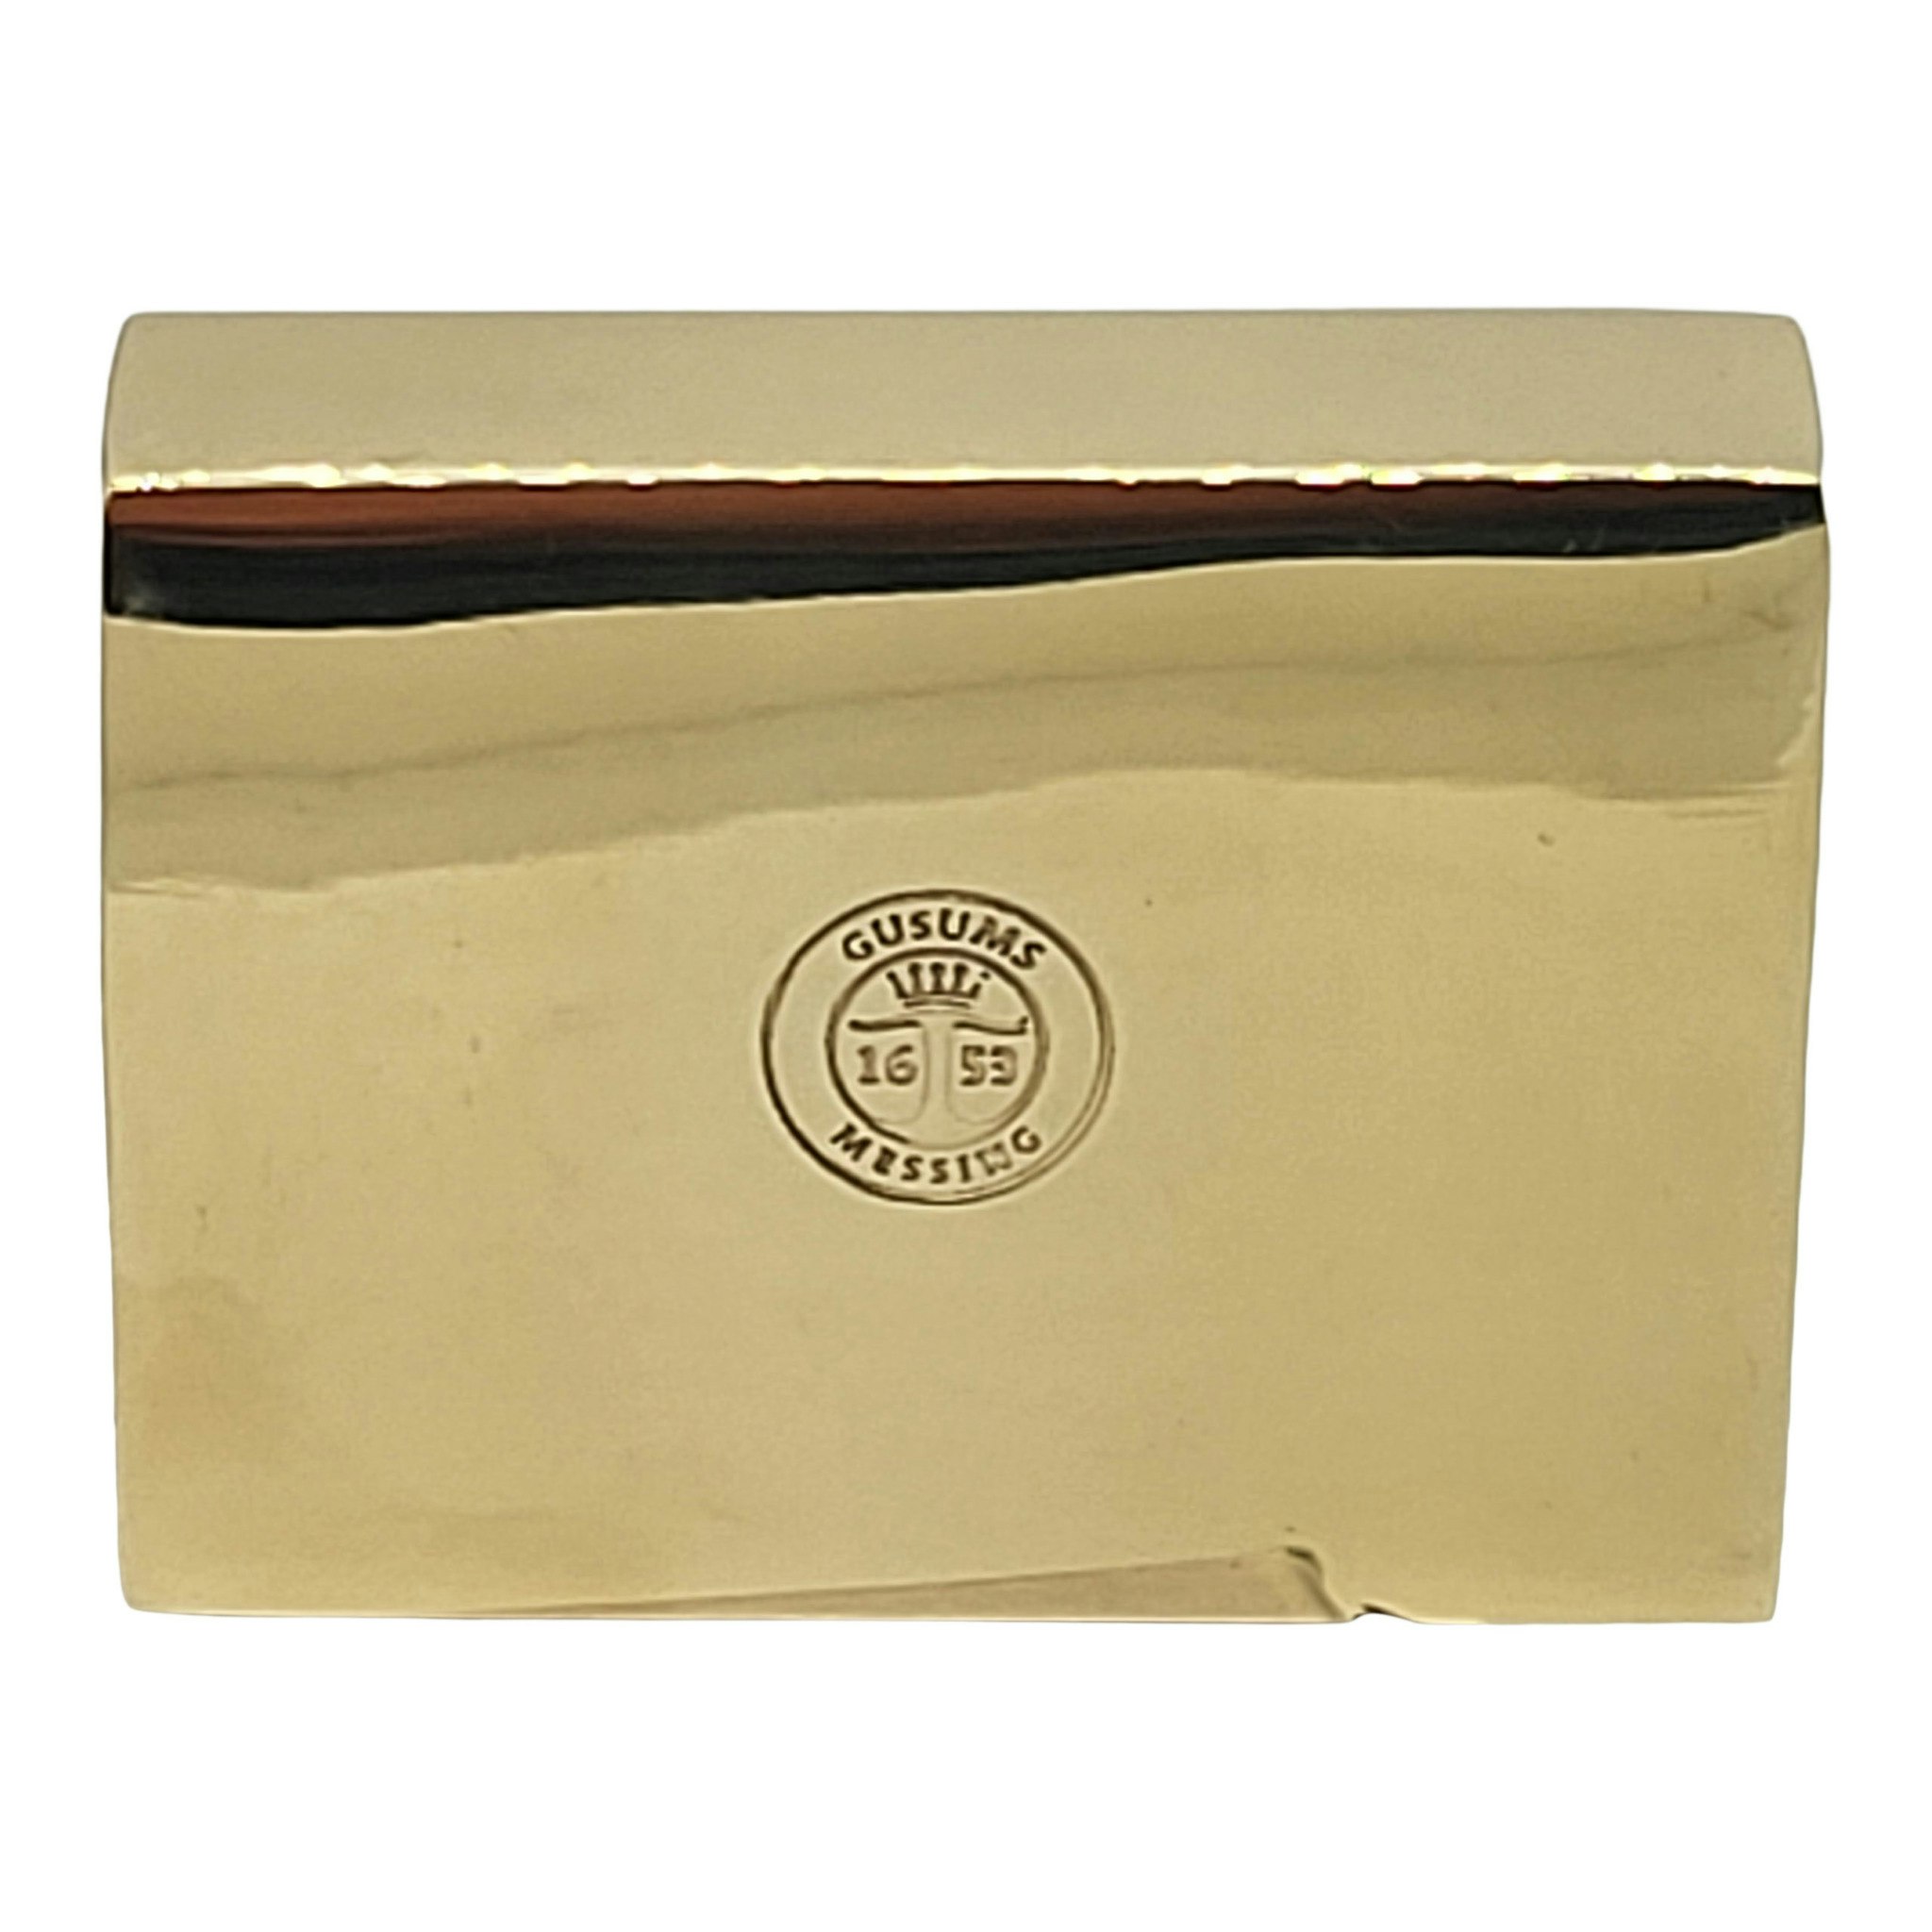 Medium size matchbox in polished brass with lion mascara